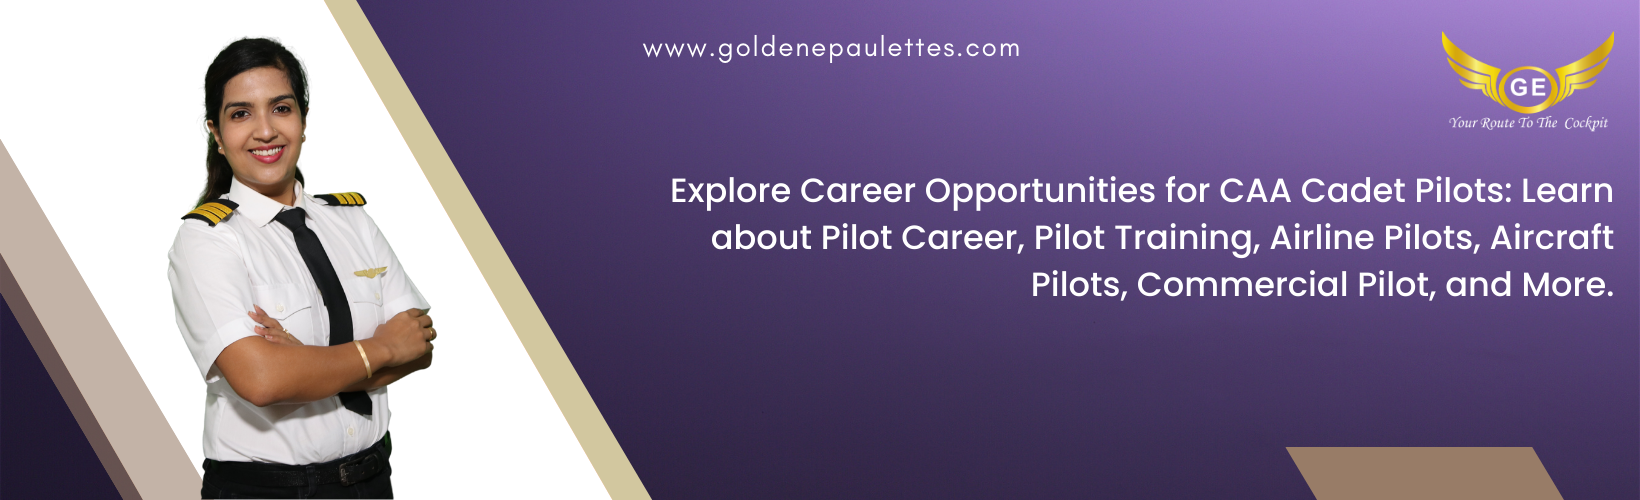 Career Opportunities for CAA Cadet Pilots